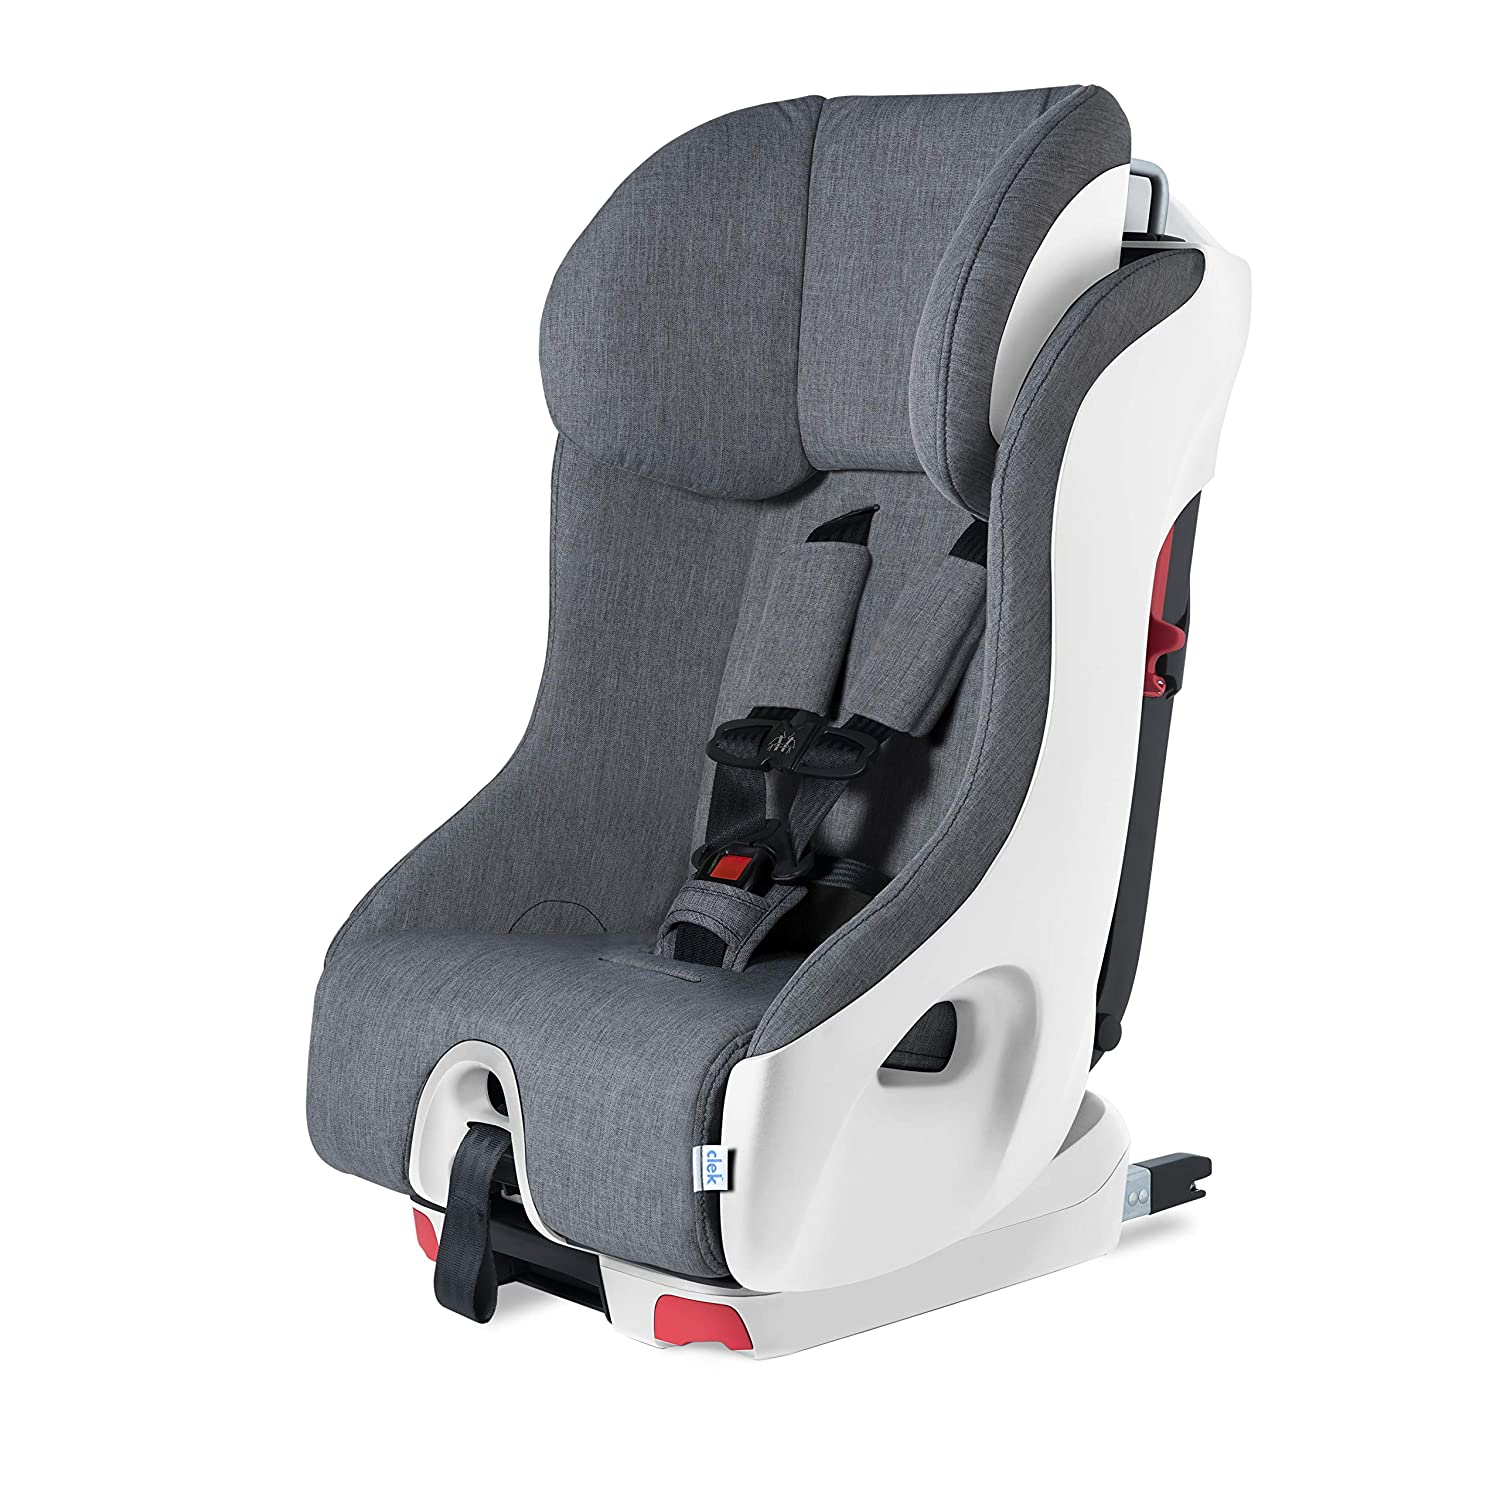 Best convertible car seats (Clek Foonf Convertible Car Seat)